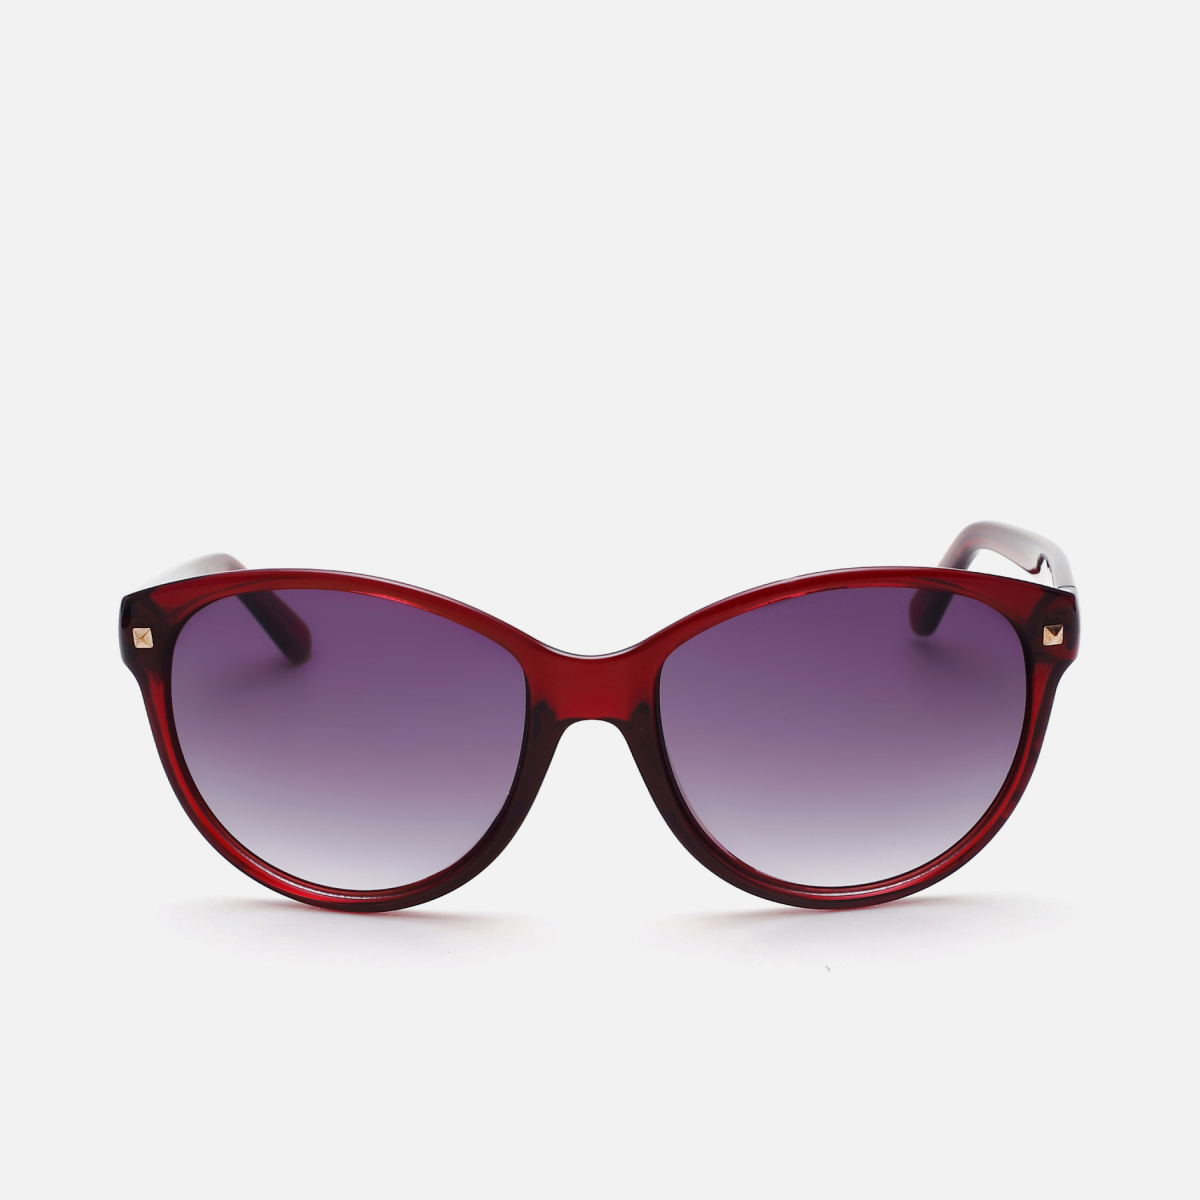 BEBE Women UV-Protected Oval Sunglasses - BEBE3034C3S